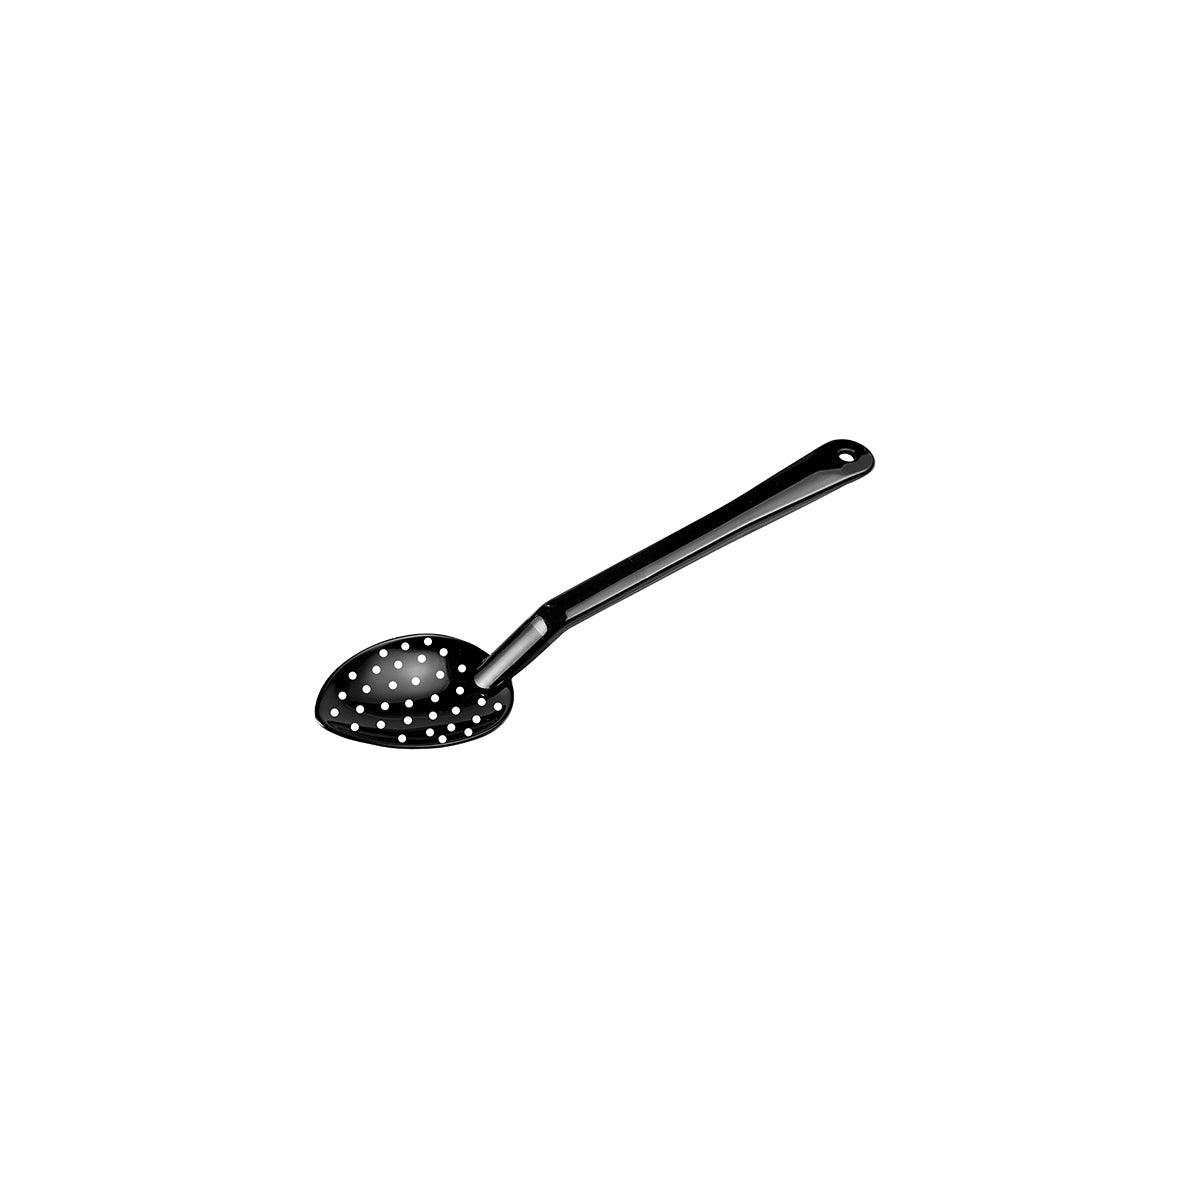 JW-P-015-BLACK Jiwins Serving Spoon Perforated Black Polycarbonate 238mm Tomkin Australia Hospitality Supplies